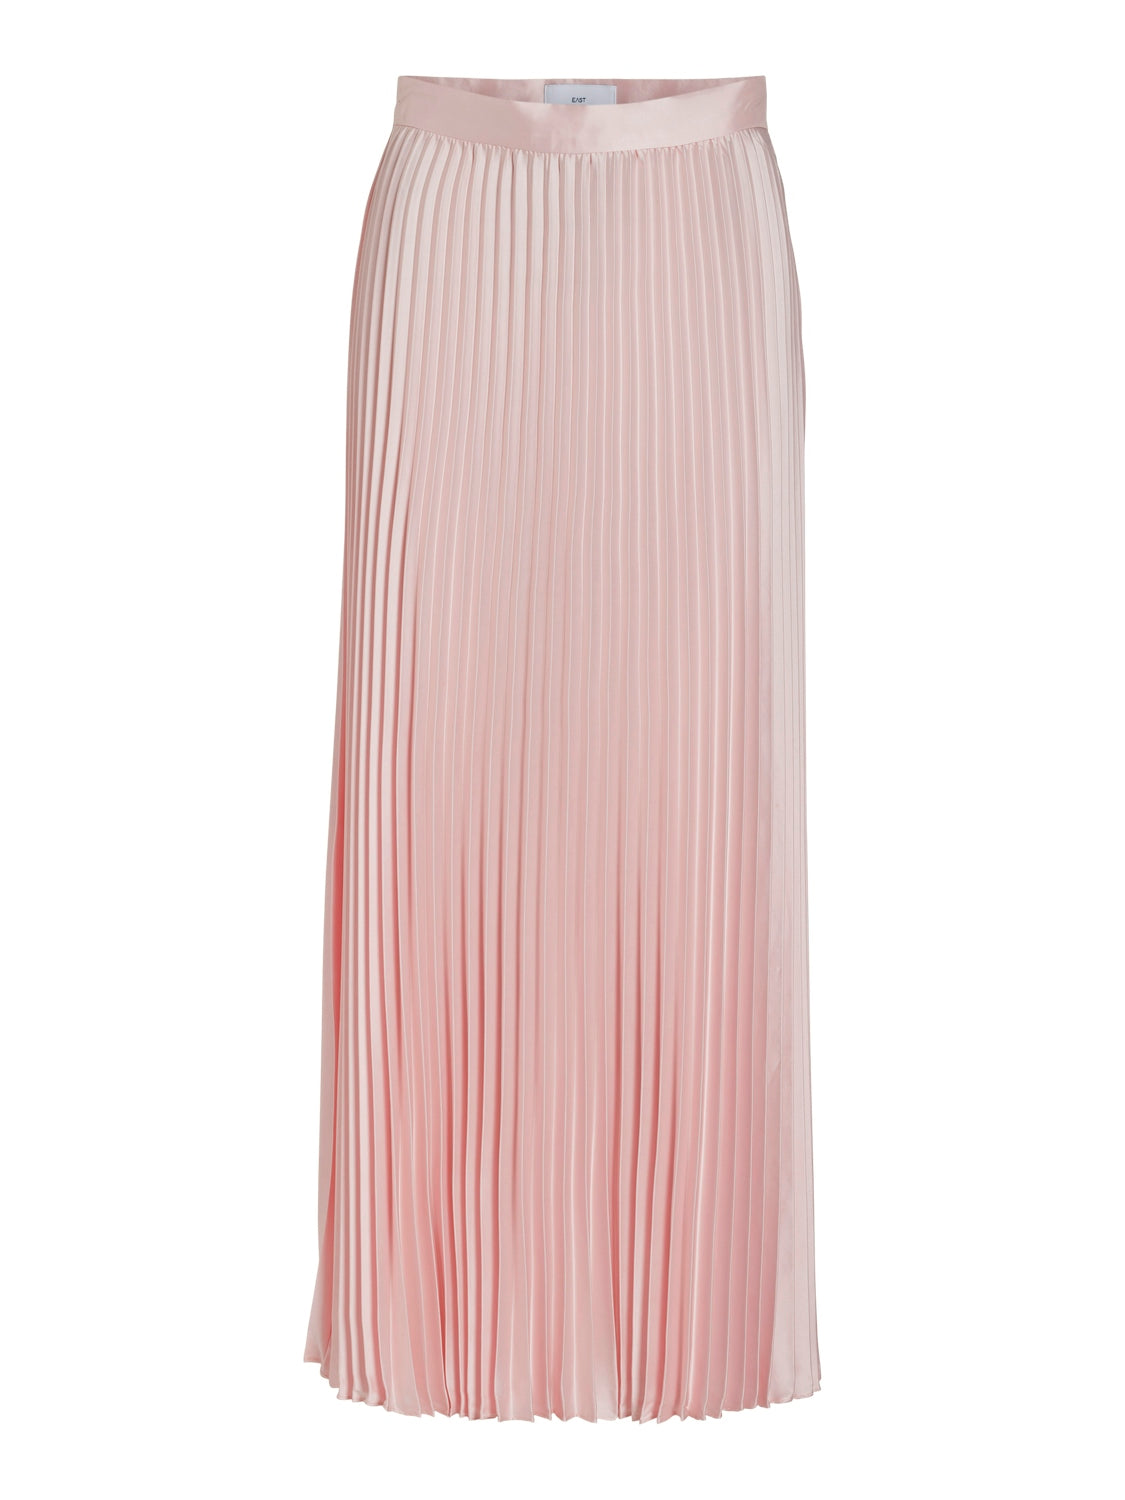 Plaza Plisse Long Skirt (Silver Pink)